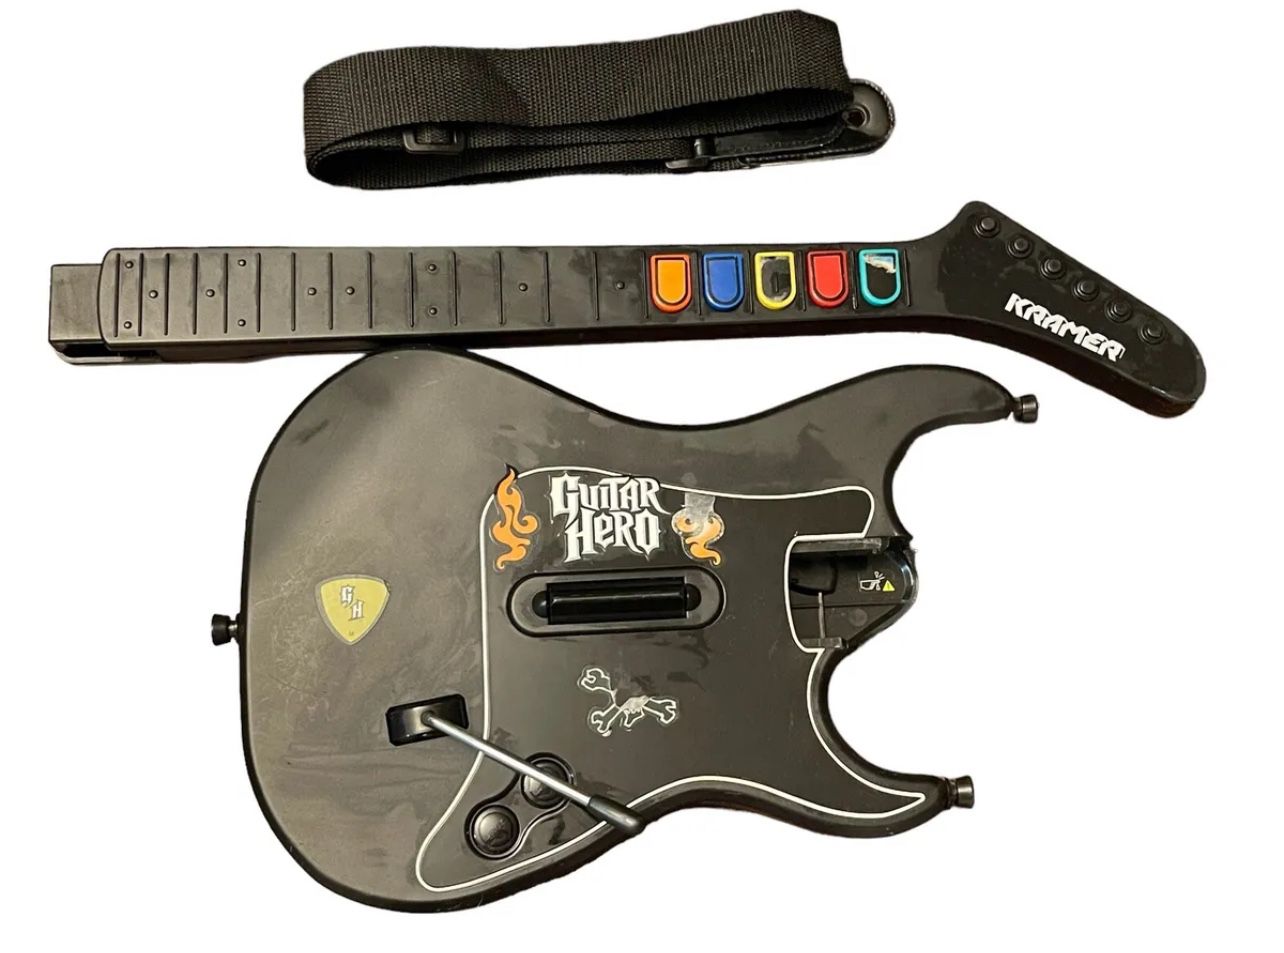 Guitar Hero Kramer Striker Guitar Redoctane Pre-Owned No Battery Cover